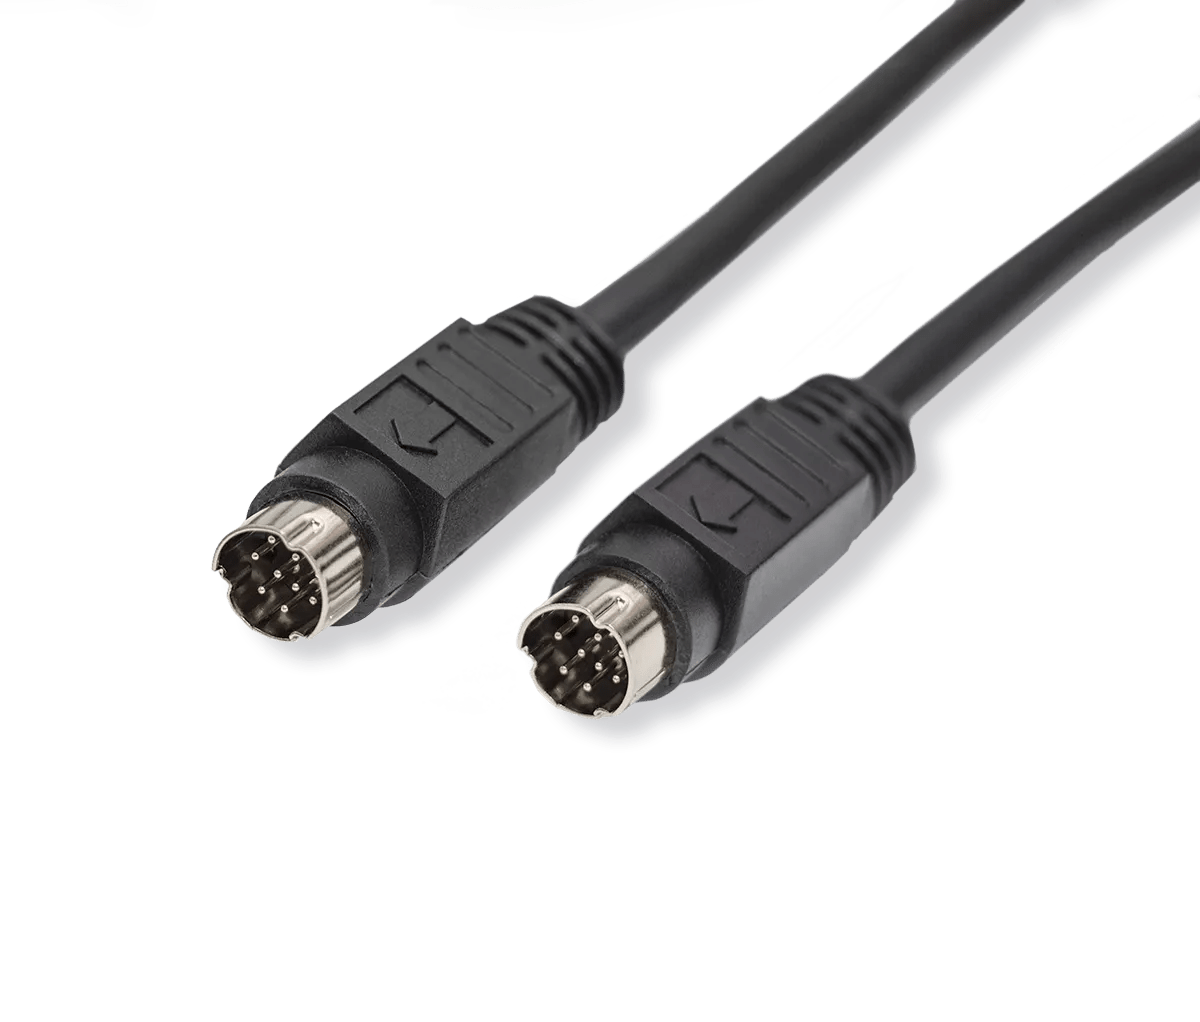 Cables - Audio